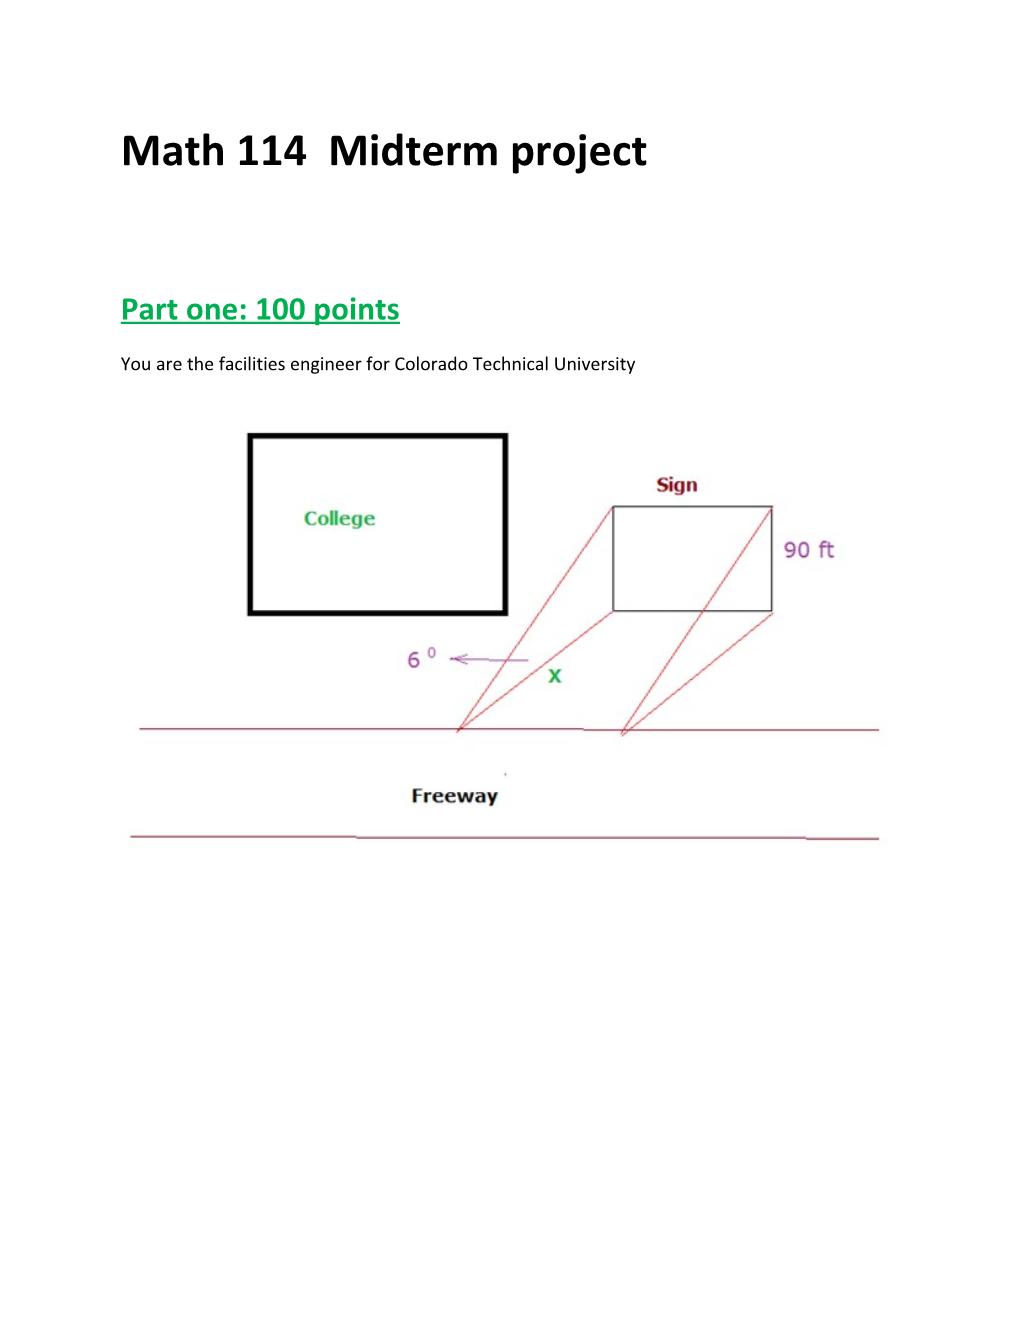 Math 114 Midterm Project